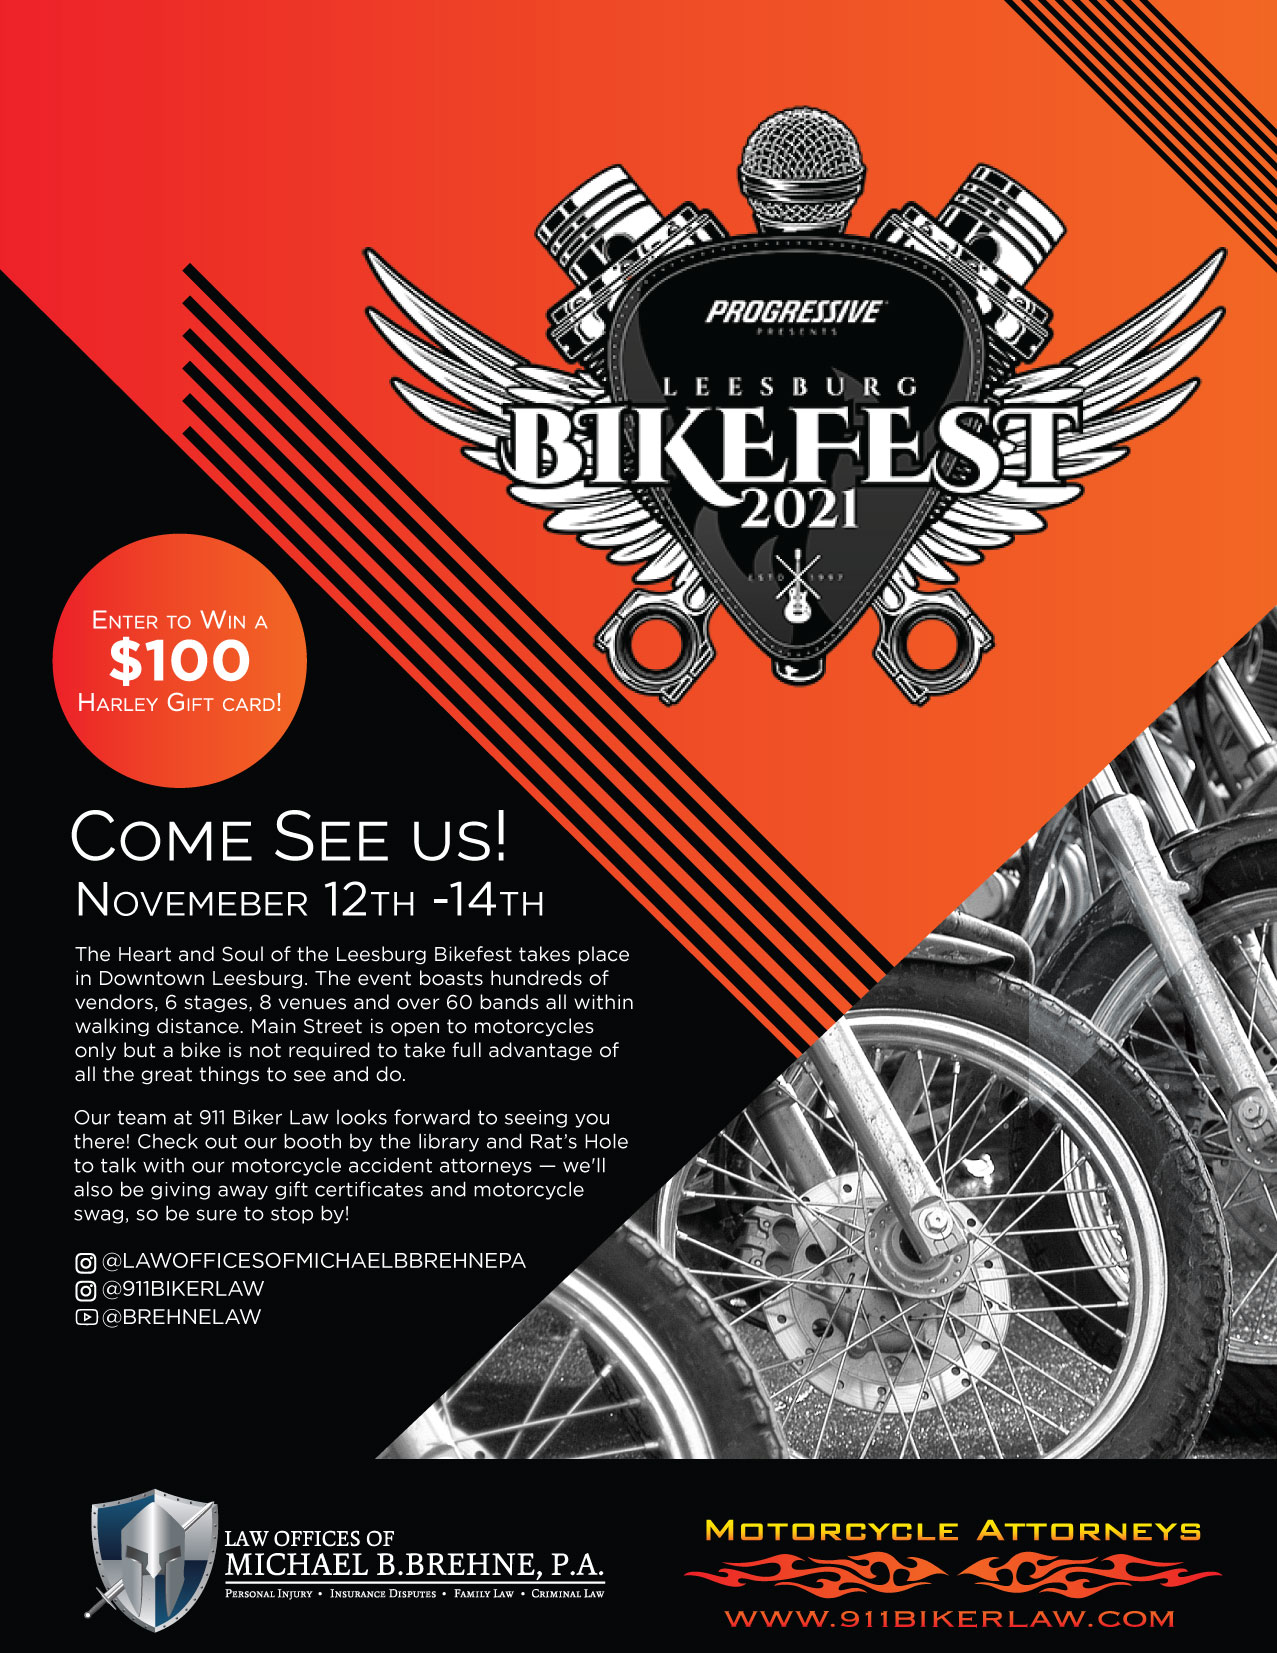 Come See Us At Leesburg Bikefest!